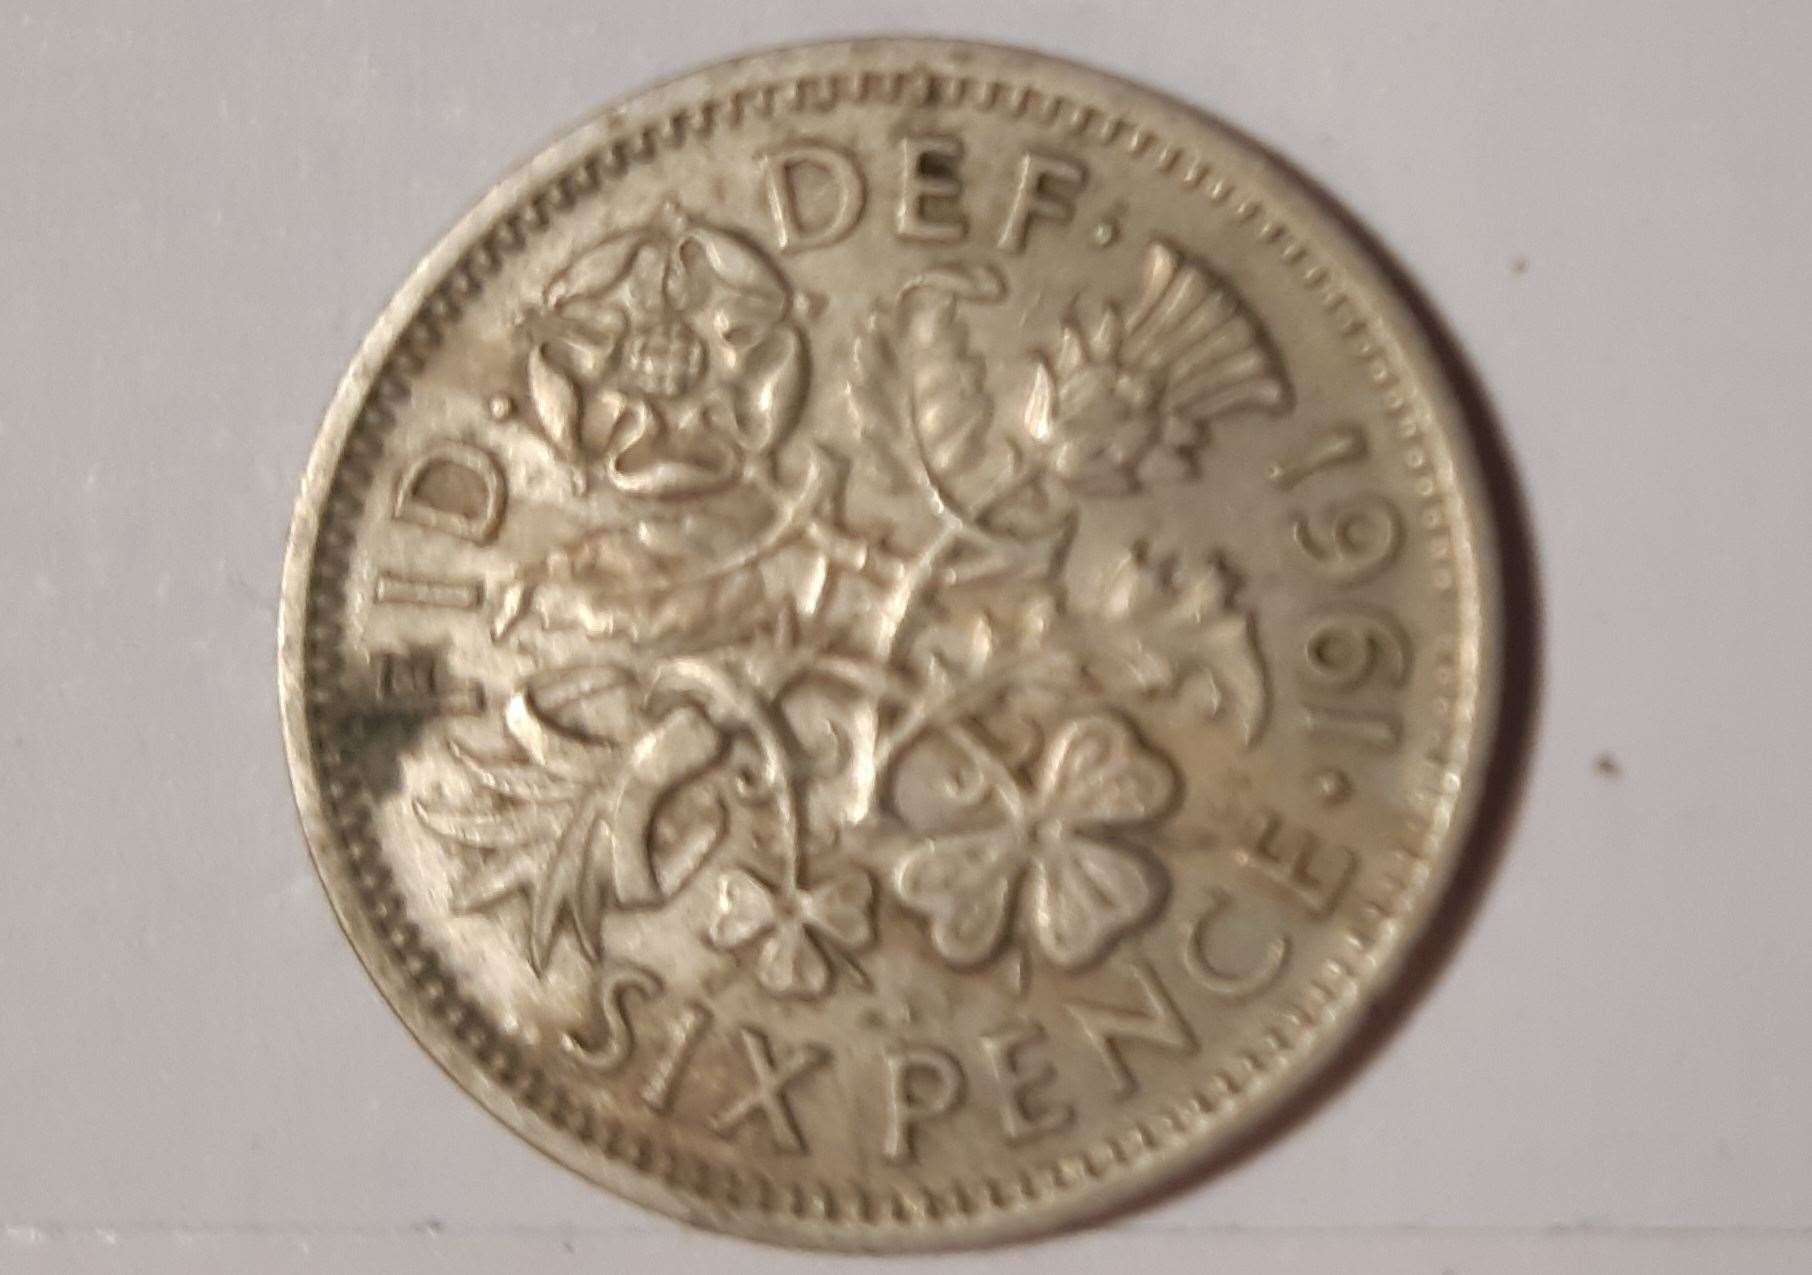 A 1961 sixpence